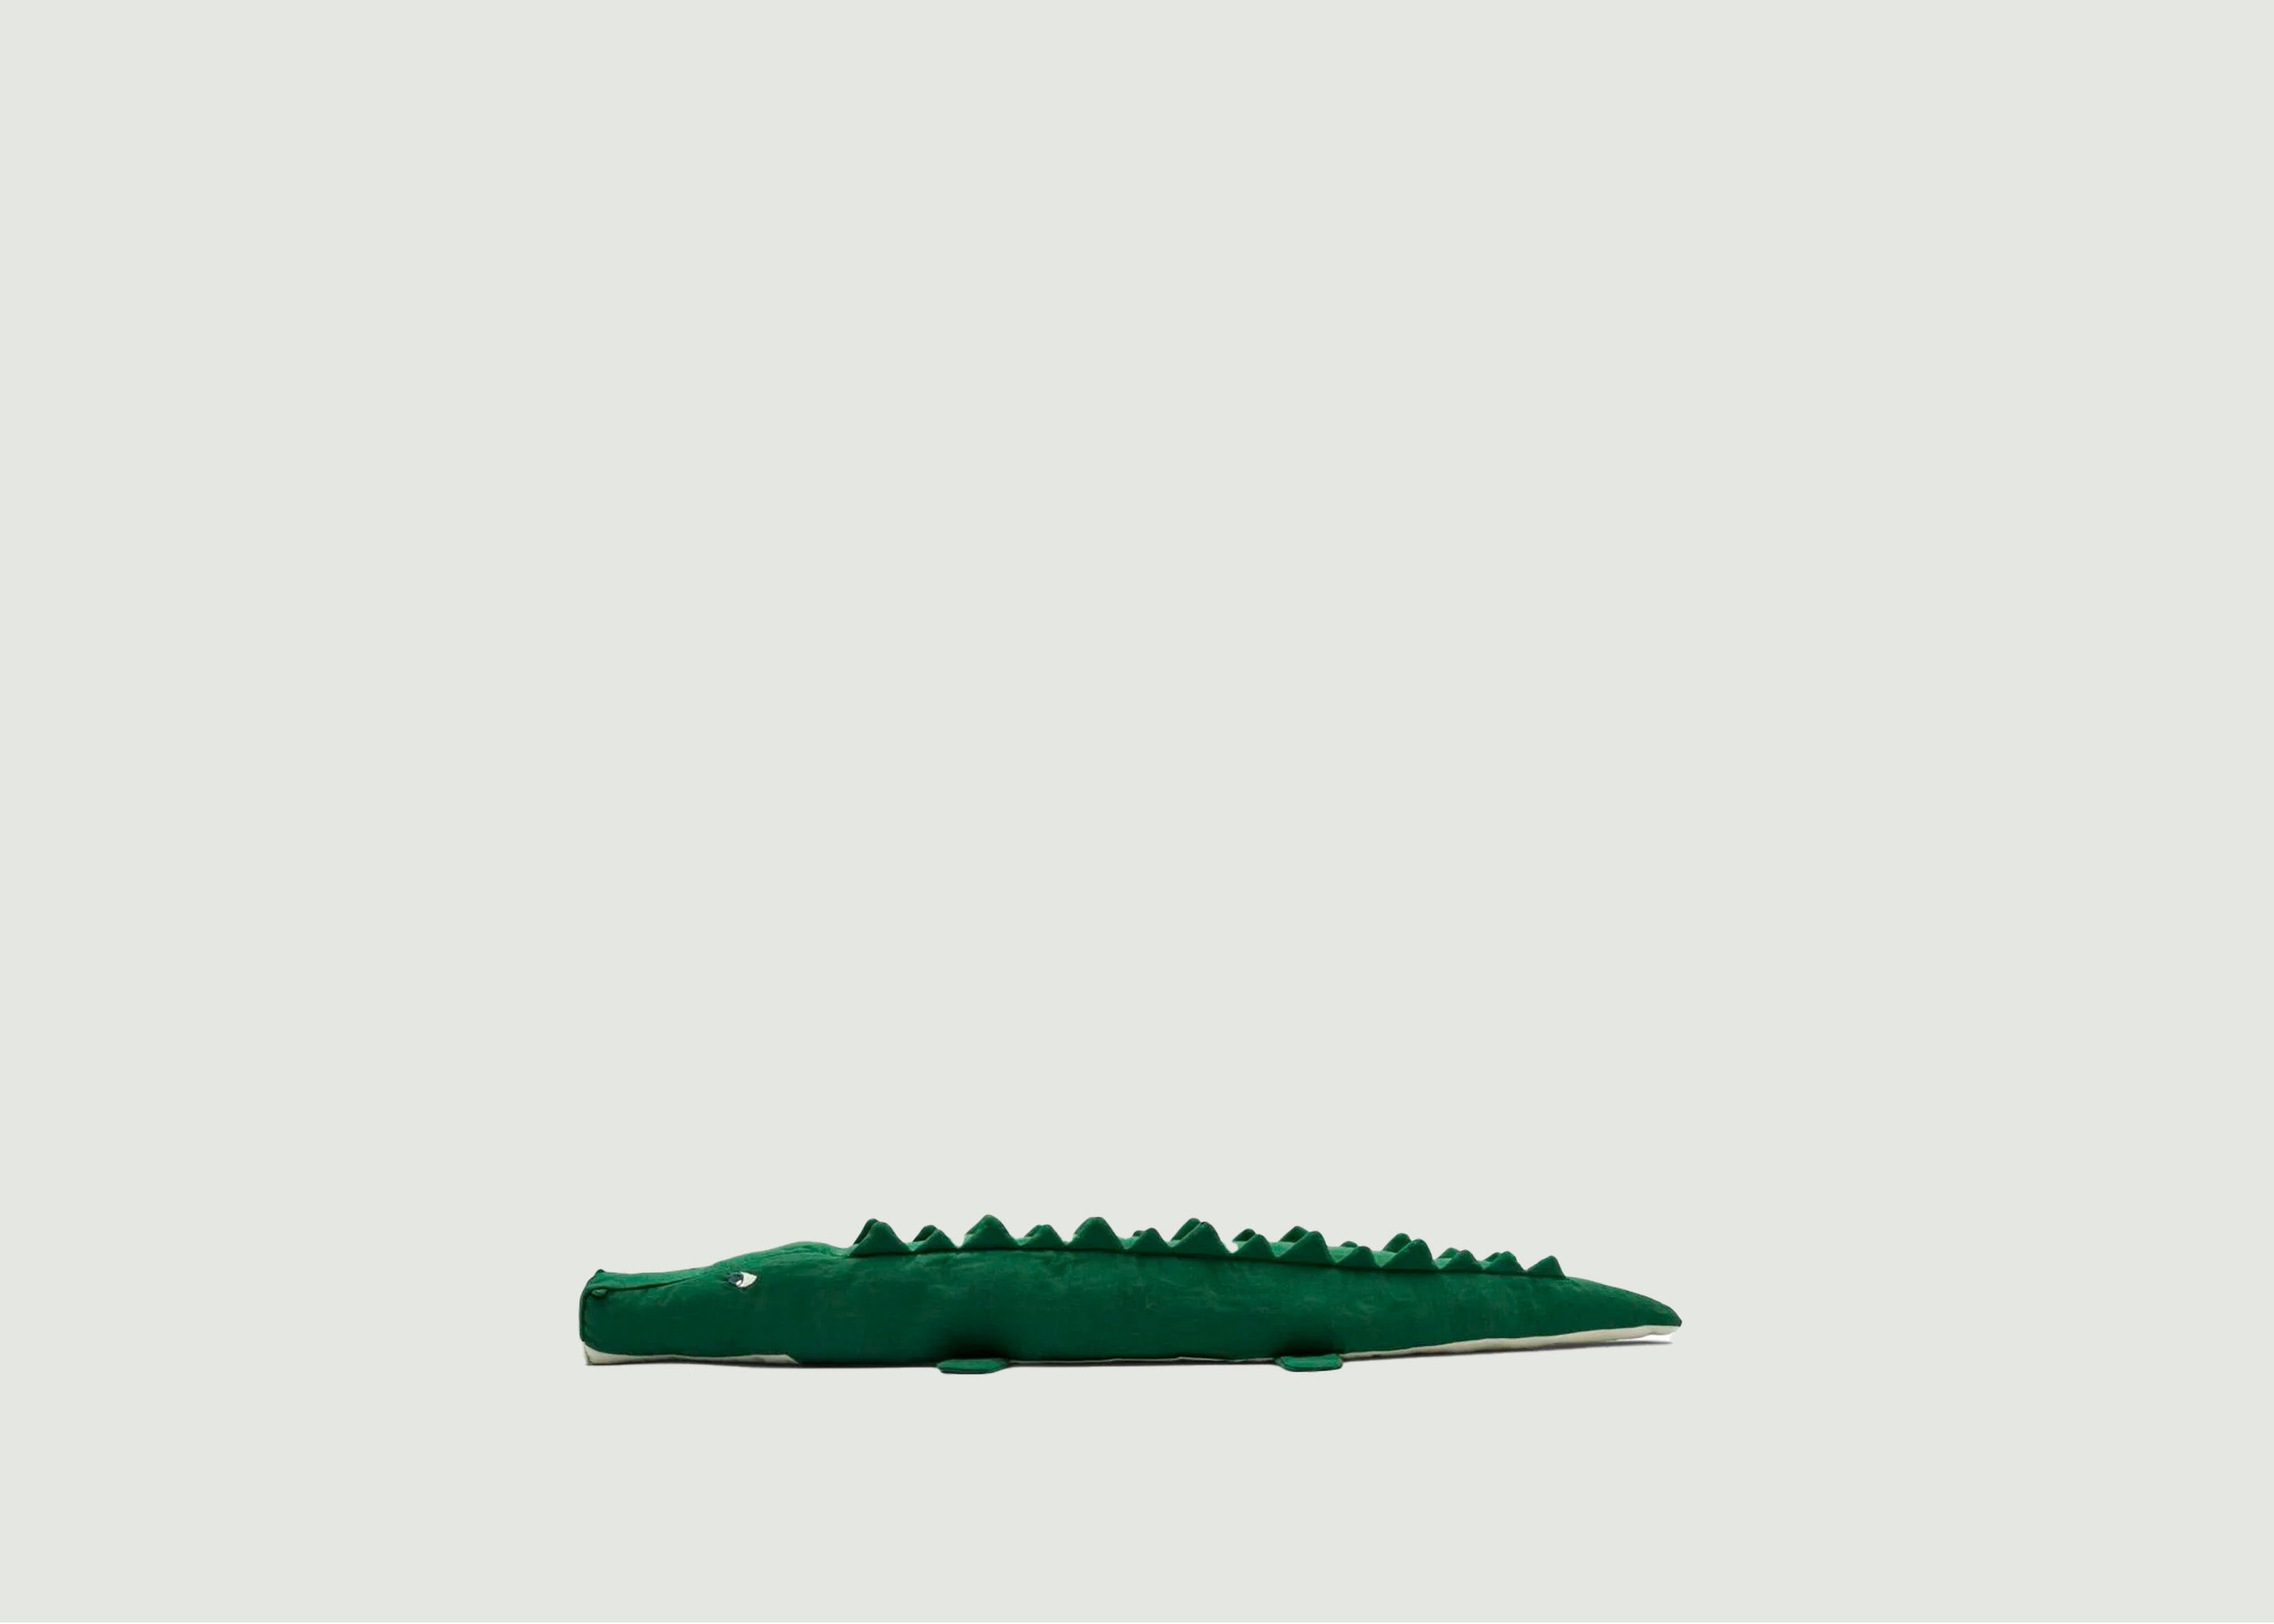 Large crocodile plush - Liewood